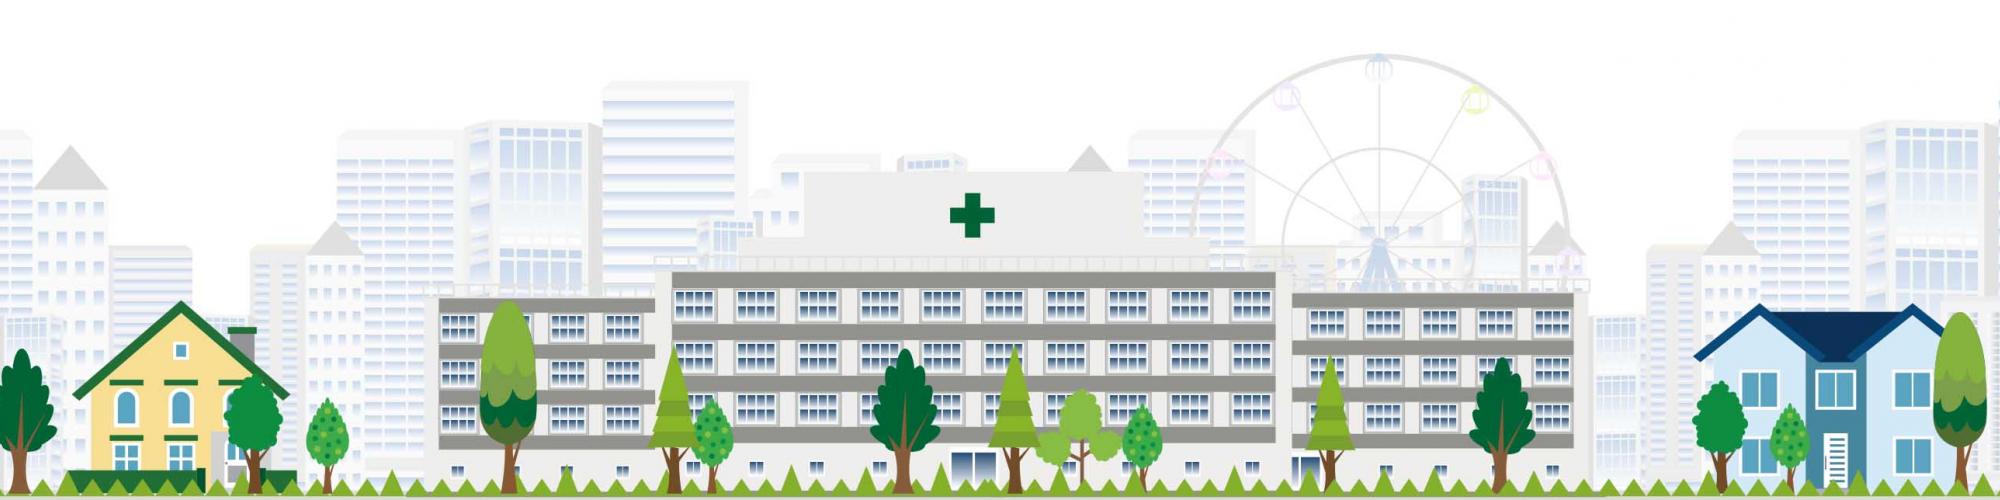 Heidekreis-Klinikum gGmbH - Krankenhaus Walsrode